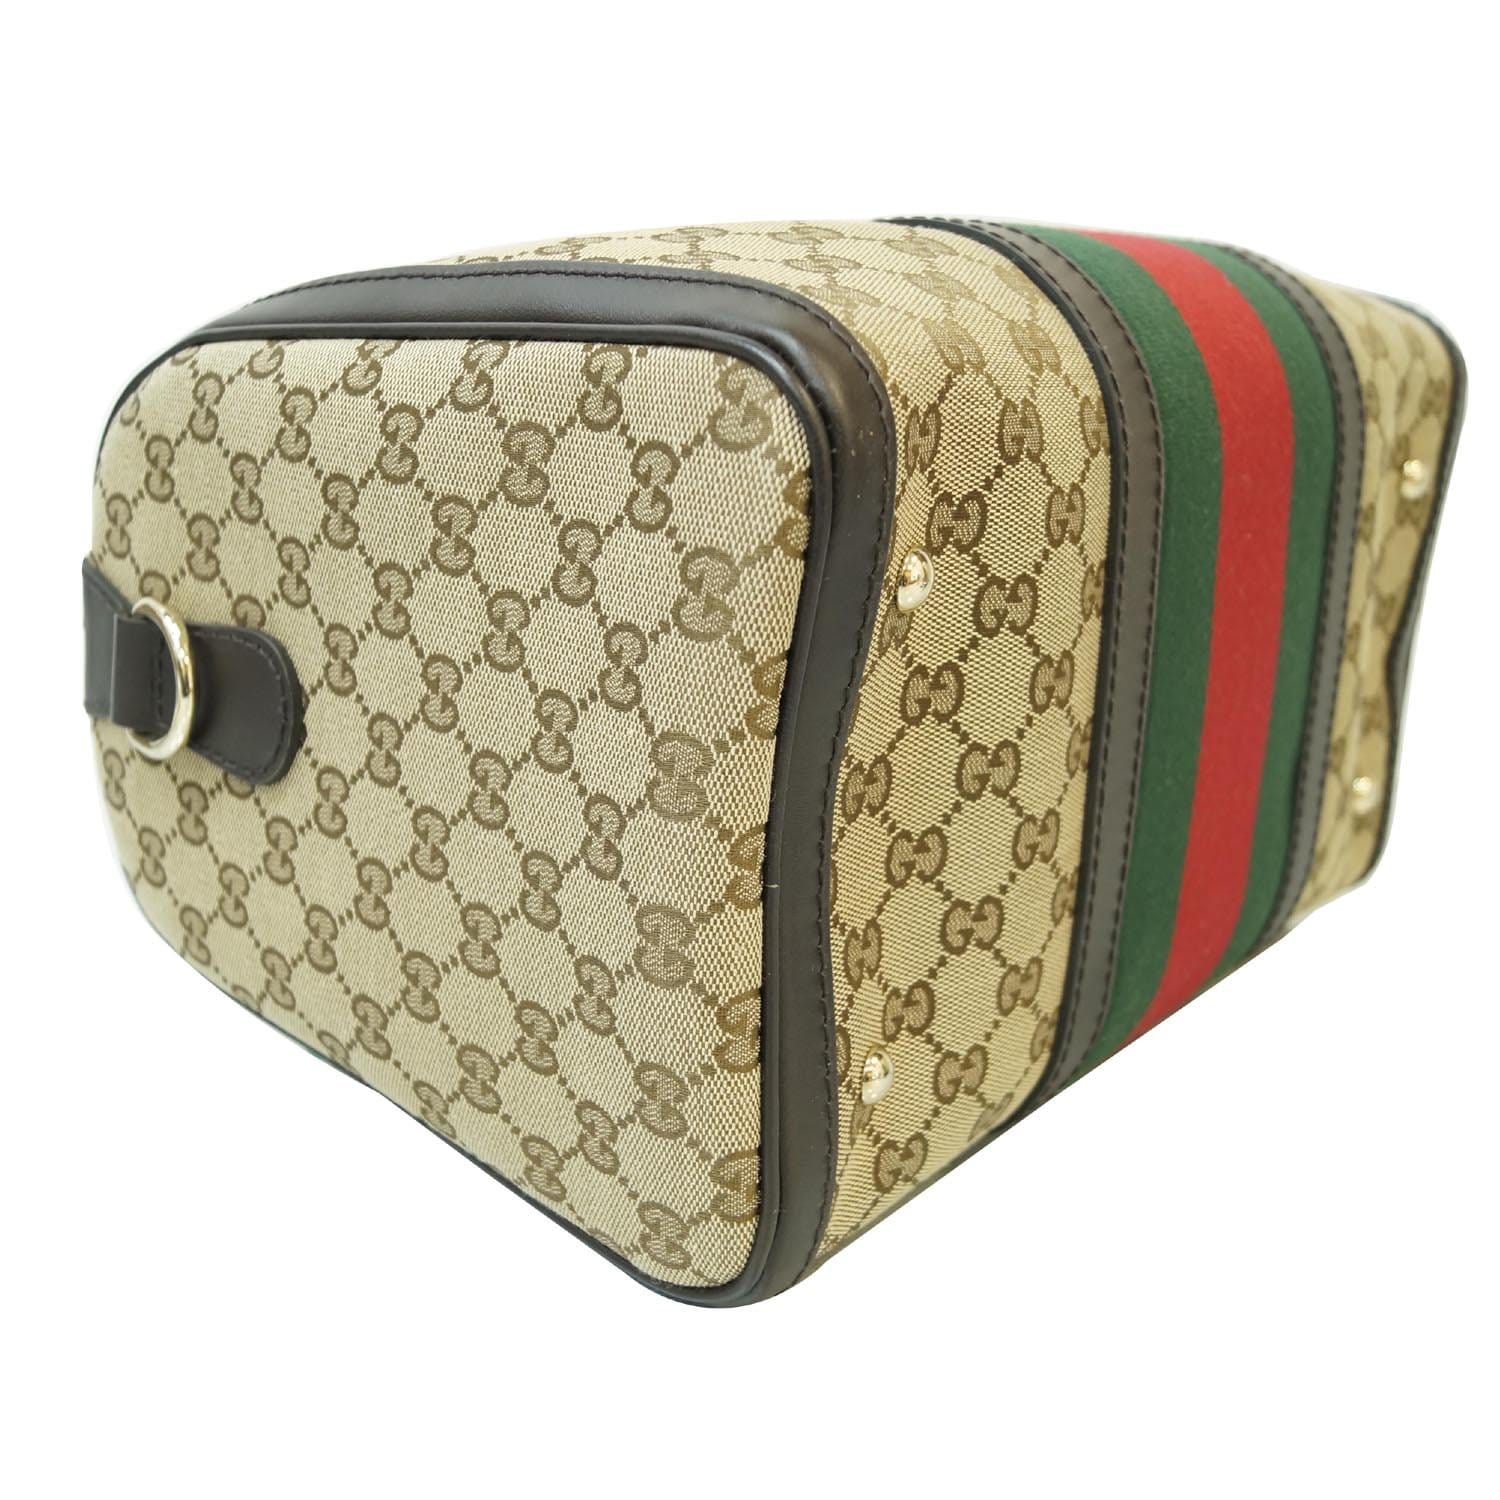 A Vintage Garment Bag By Gucci #40698778